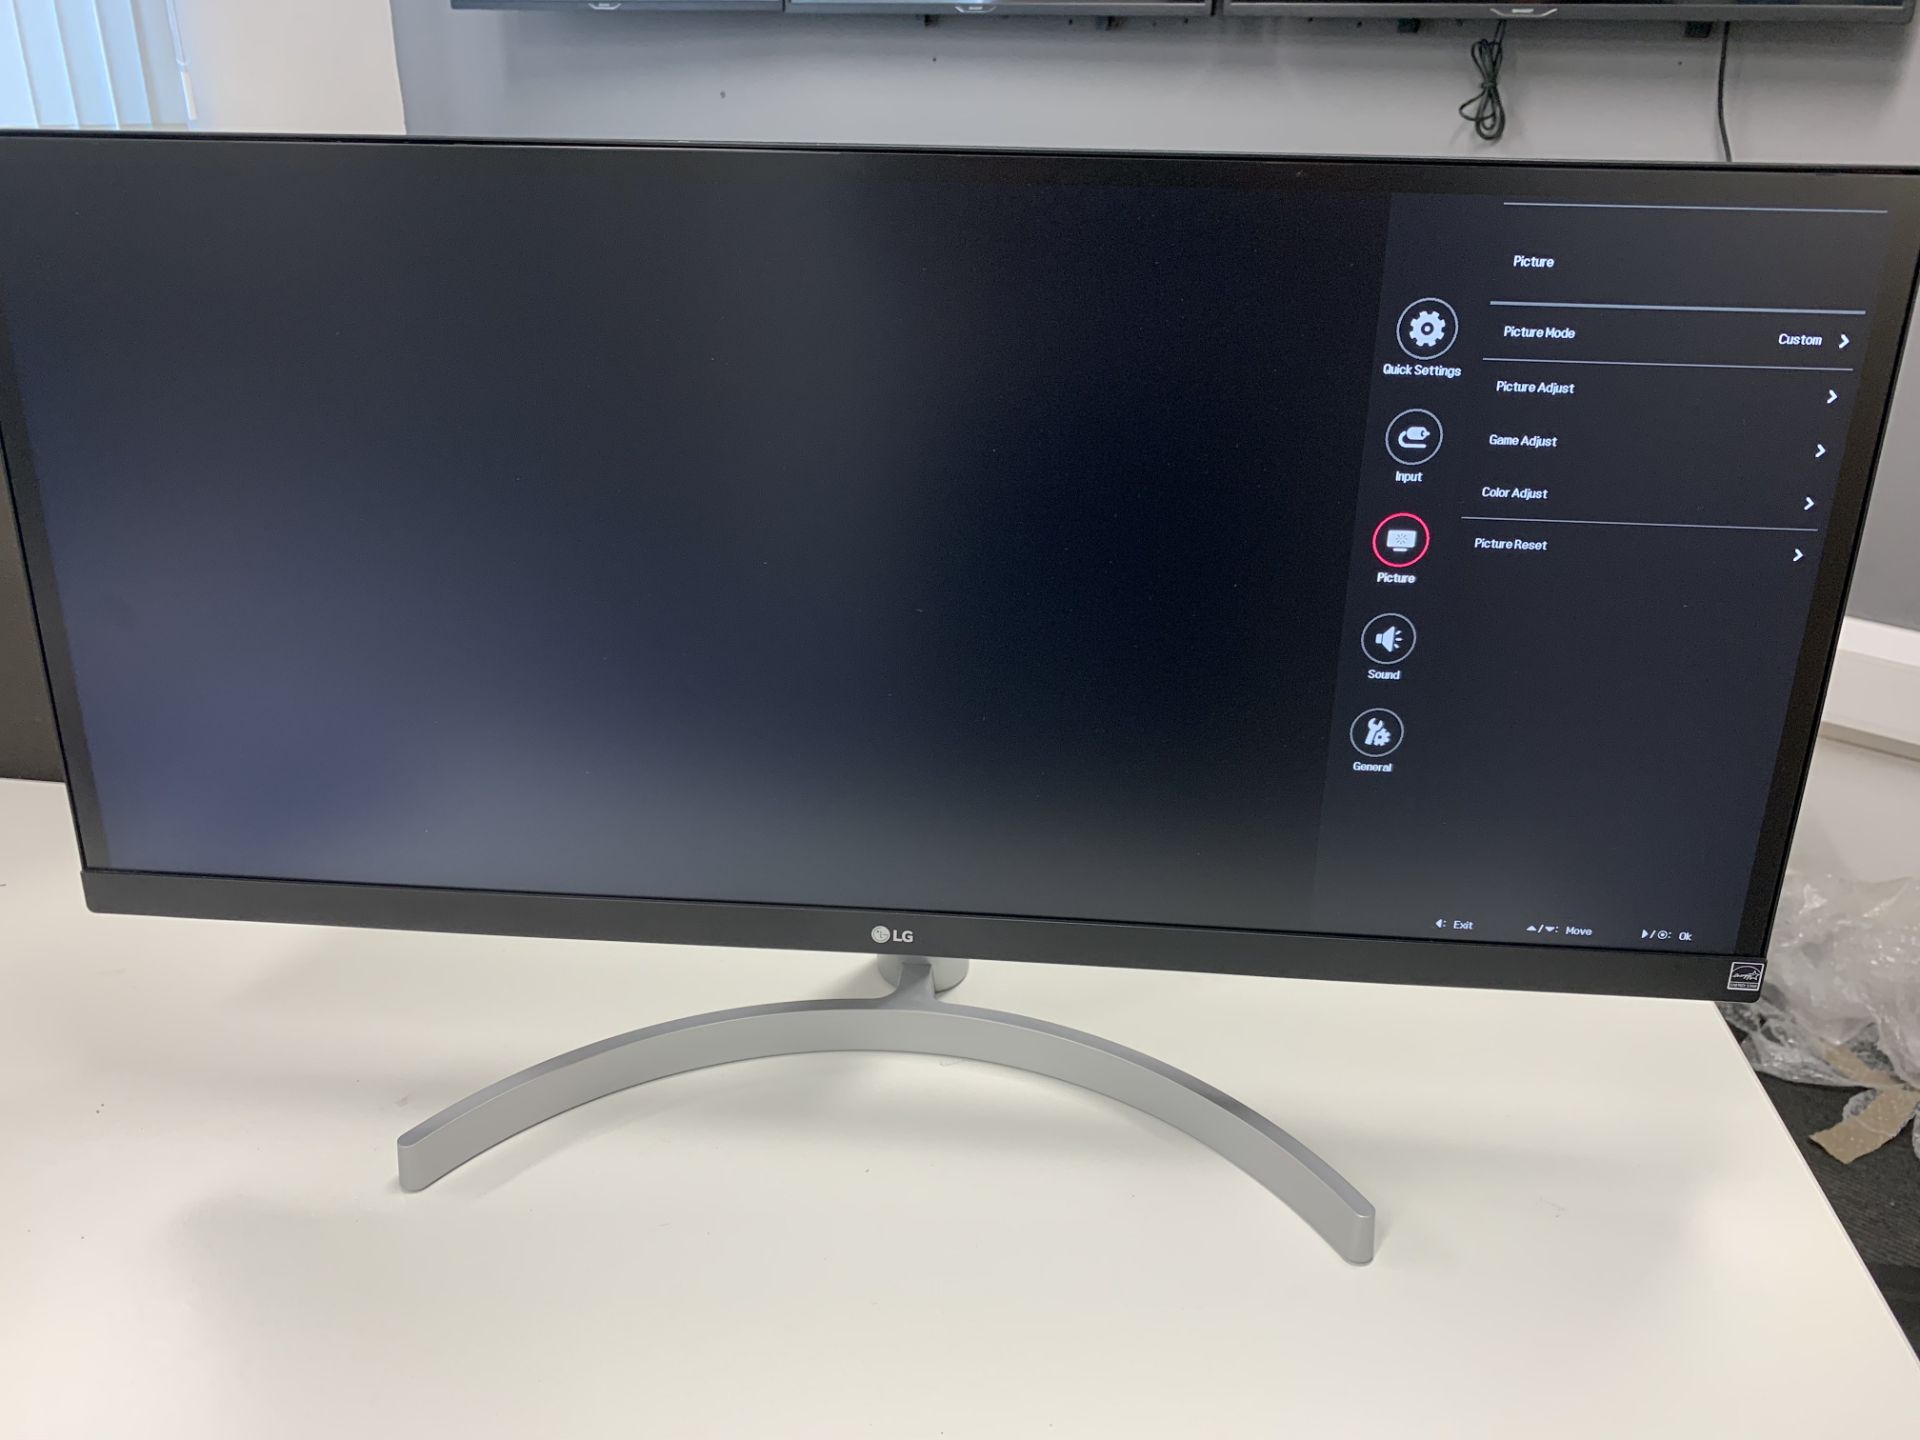 LG model 29WK600-W 29" LED back lit LCD monitor white & silver Jan 2018